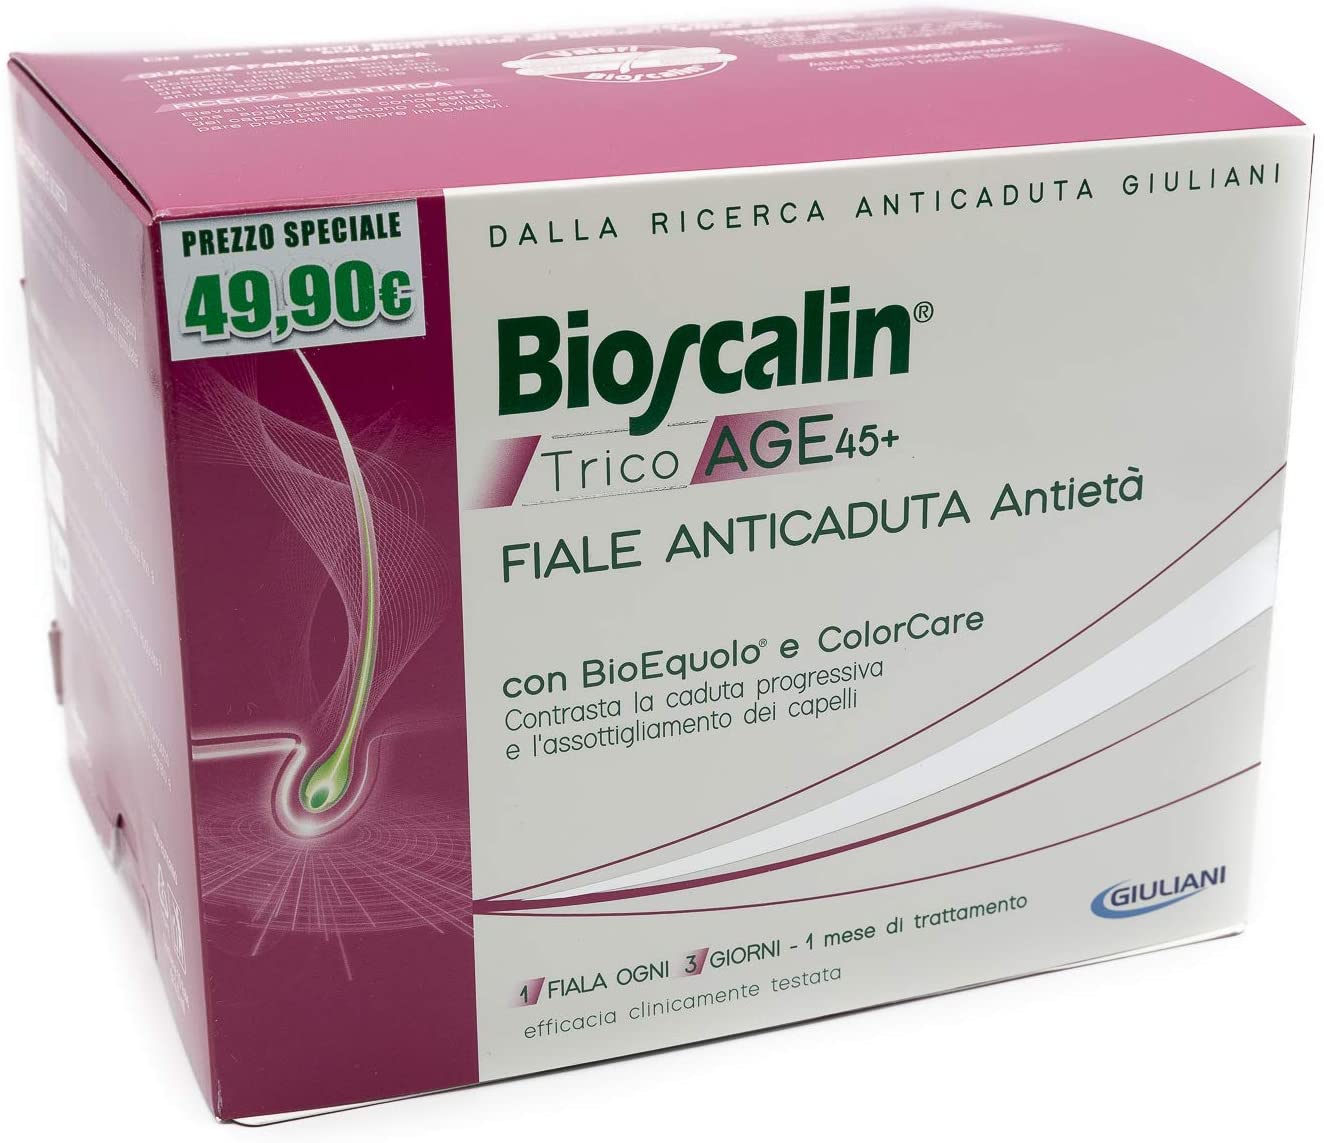 Bioscalin Tricoage 45+ Fiale anticaduta donna